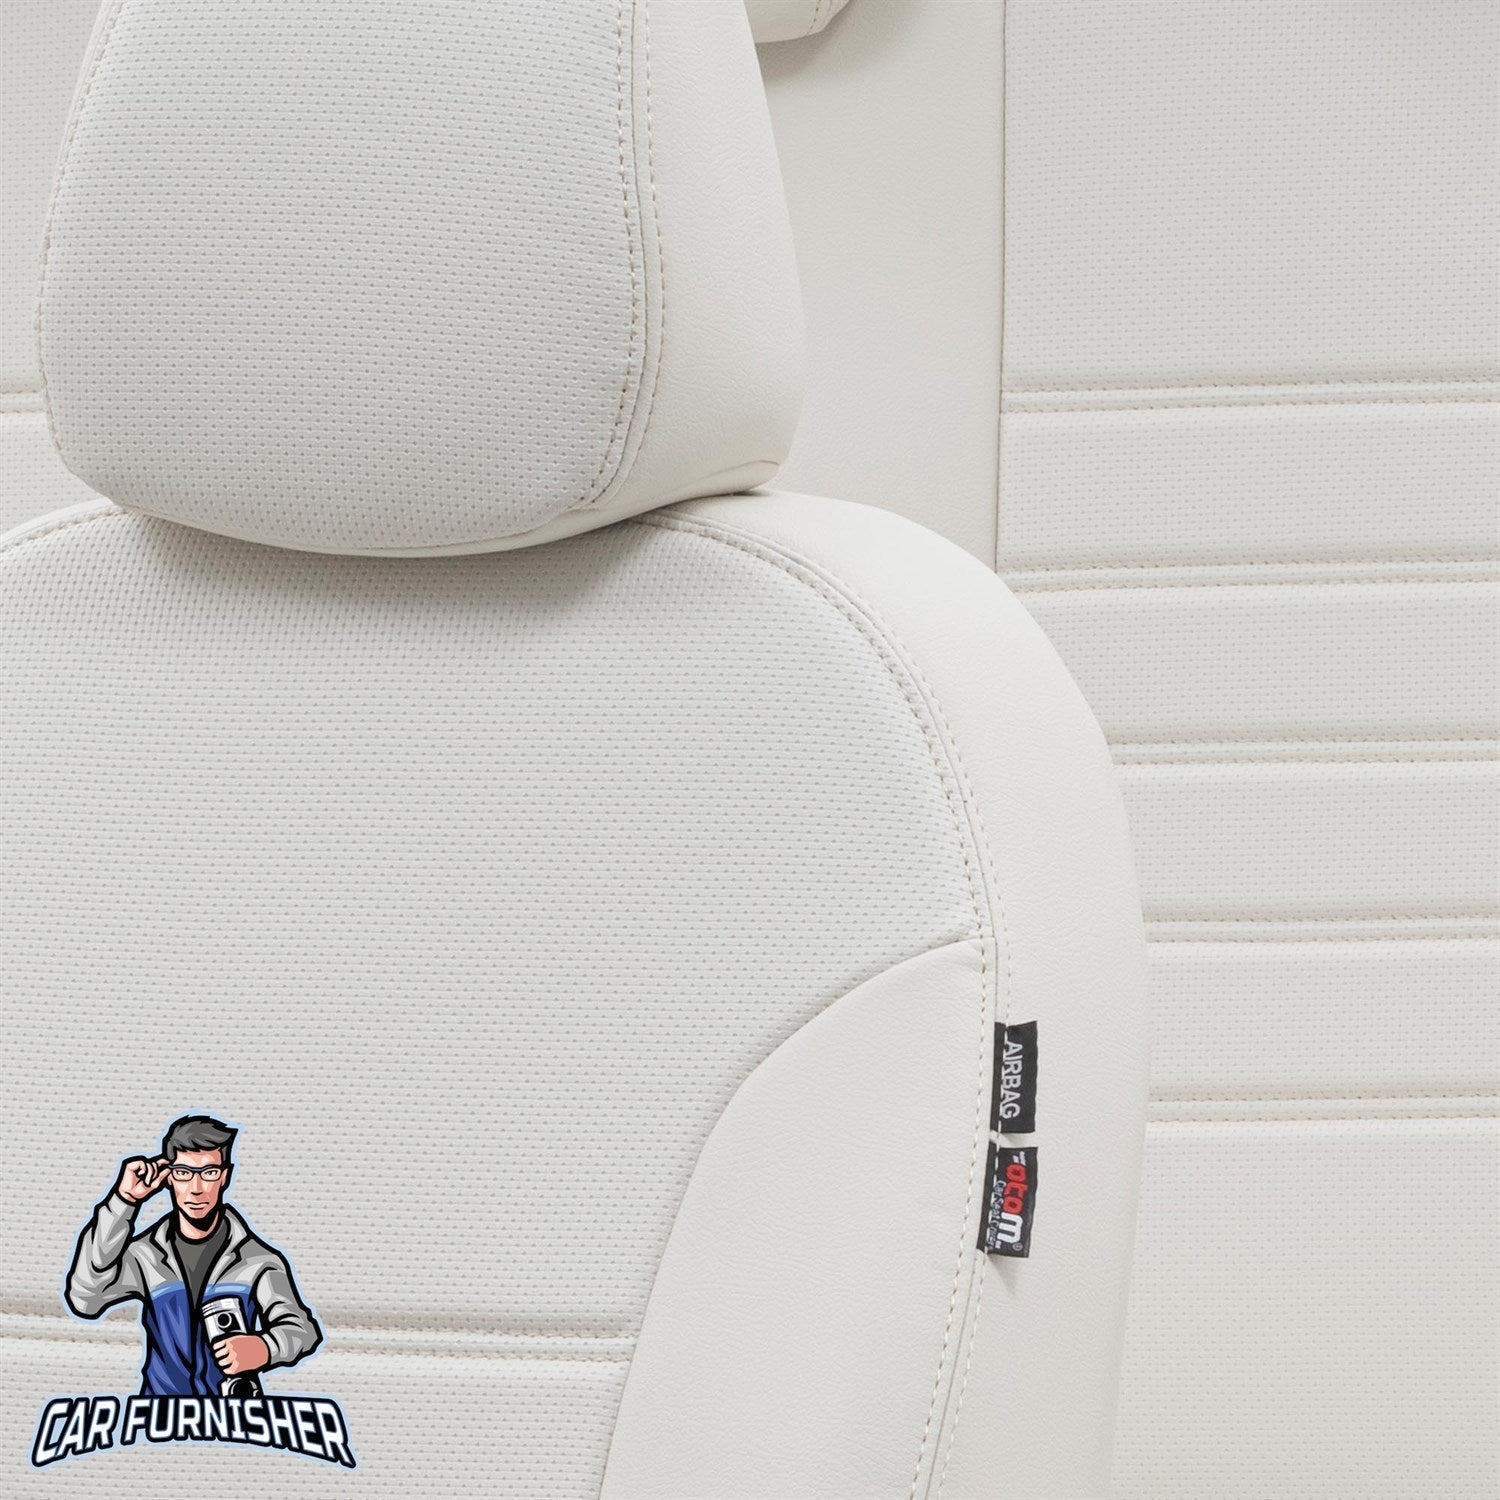 Fiat Linea Car Seat Covers 2007-2017 New York Design Ivory Full Set (5 Seats + Handrest) Leather & Fabric